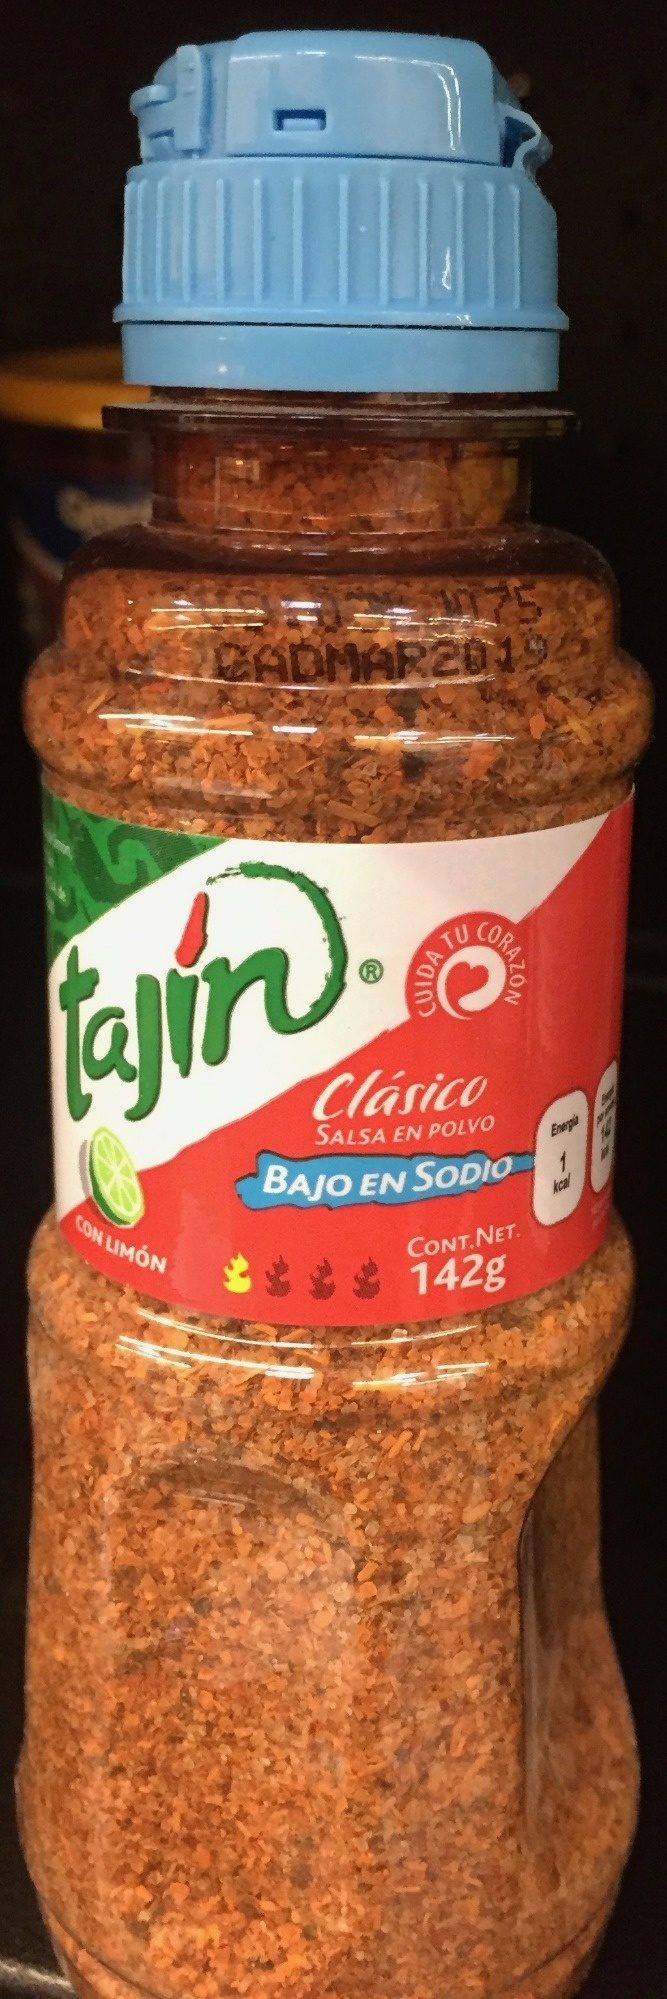 Clasico chile low sodium lime seasoning - Producto